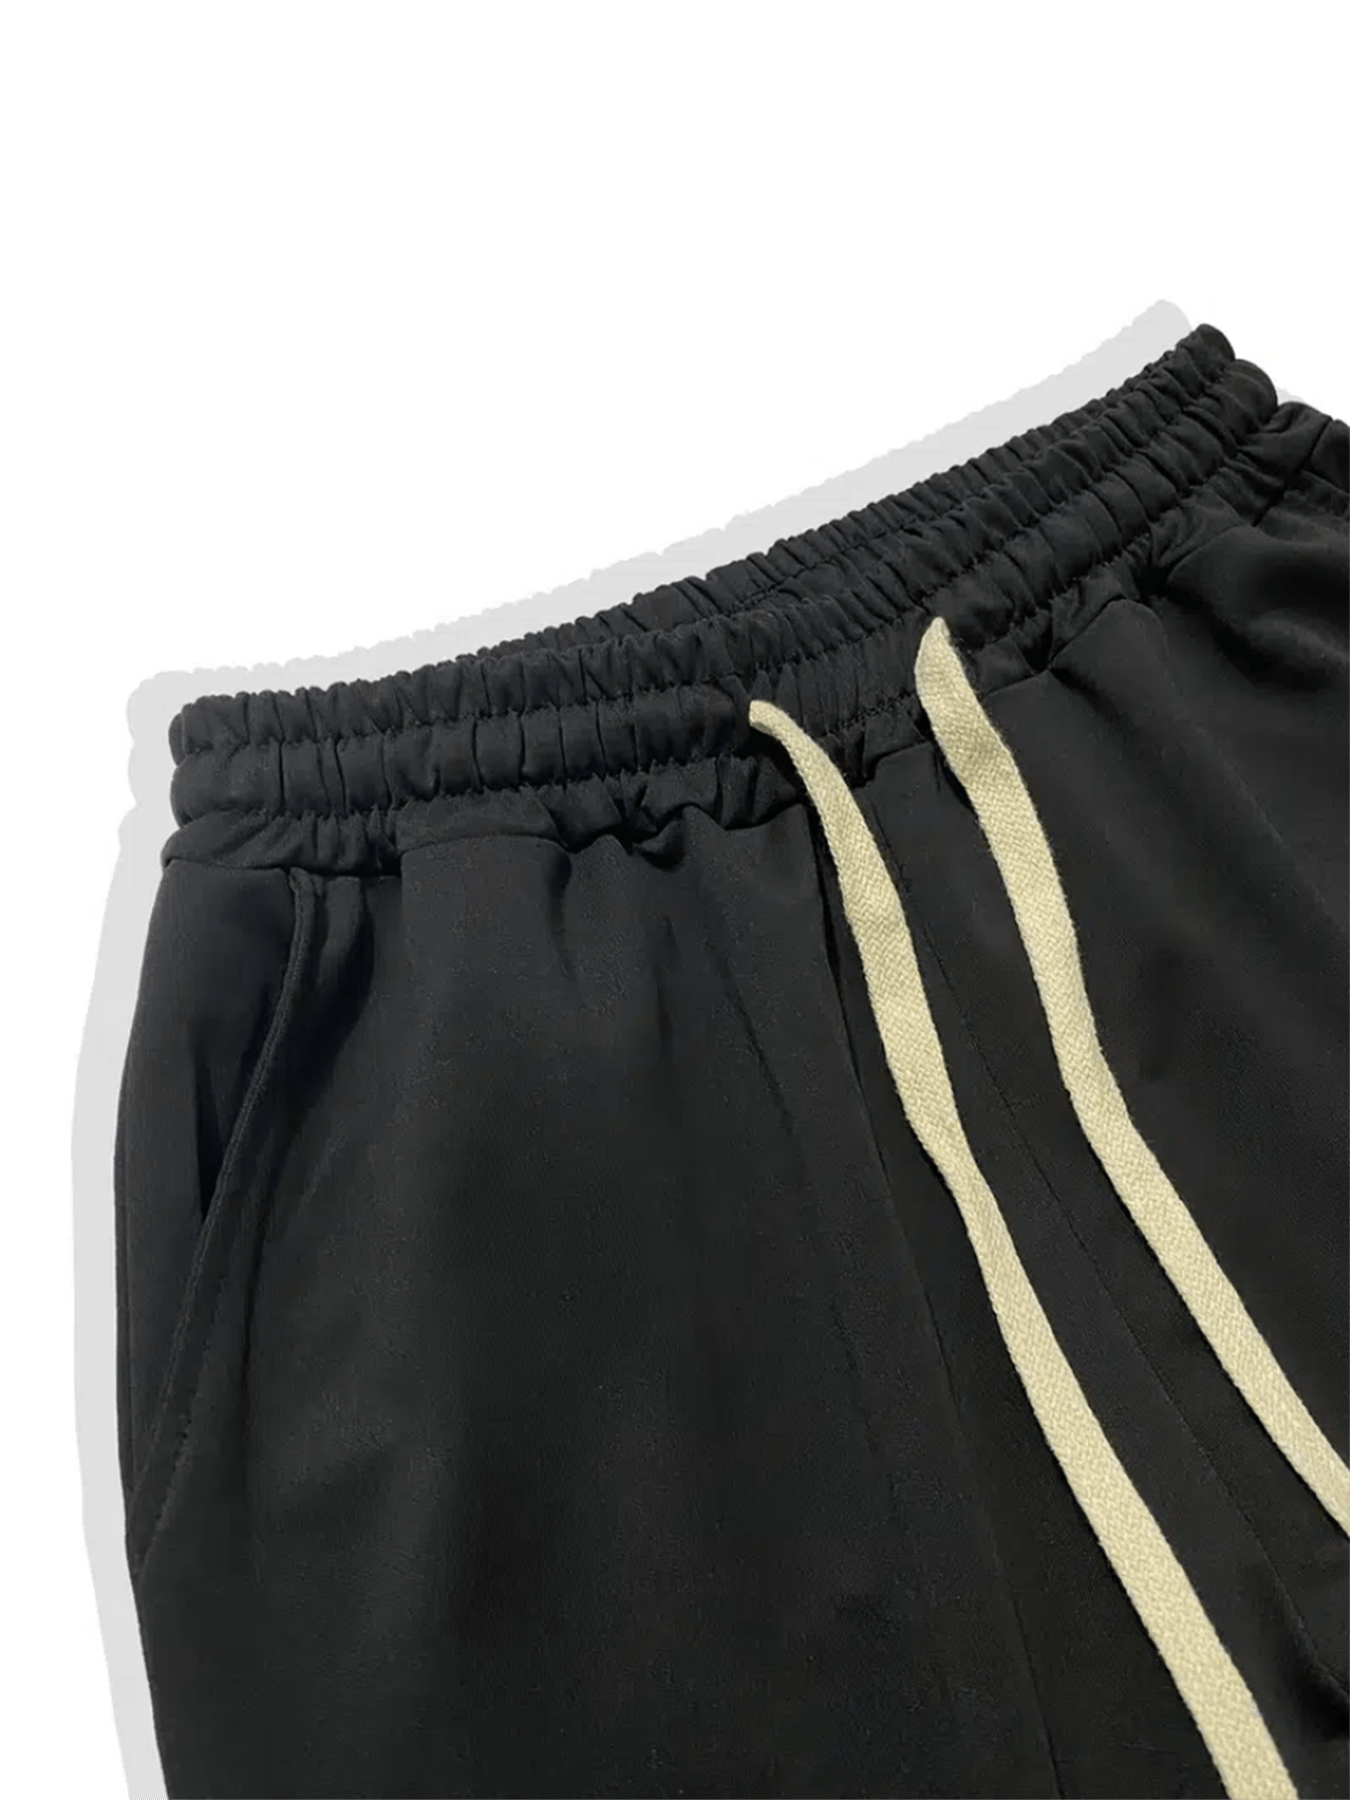 Men's Basketball Jogger Pants - Casual and Comfy with Drawstring and Pockets